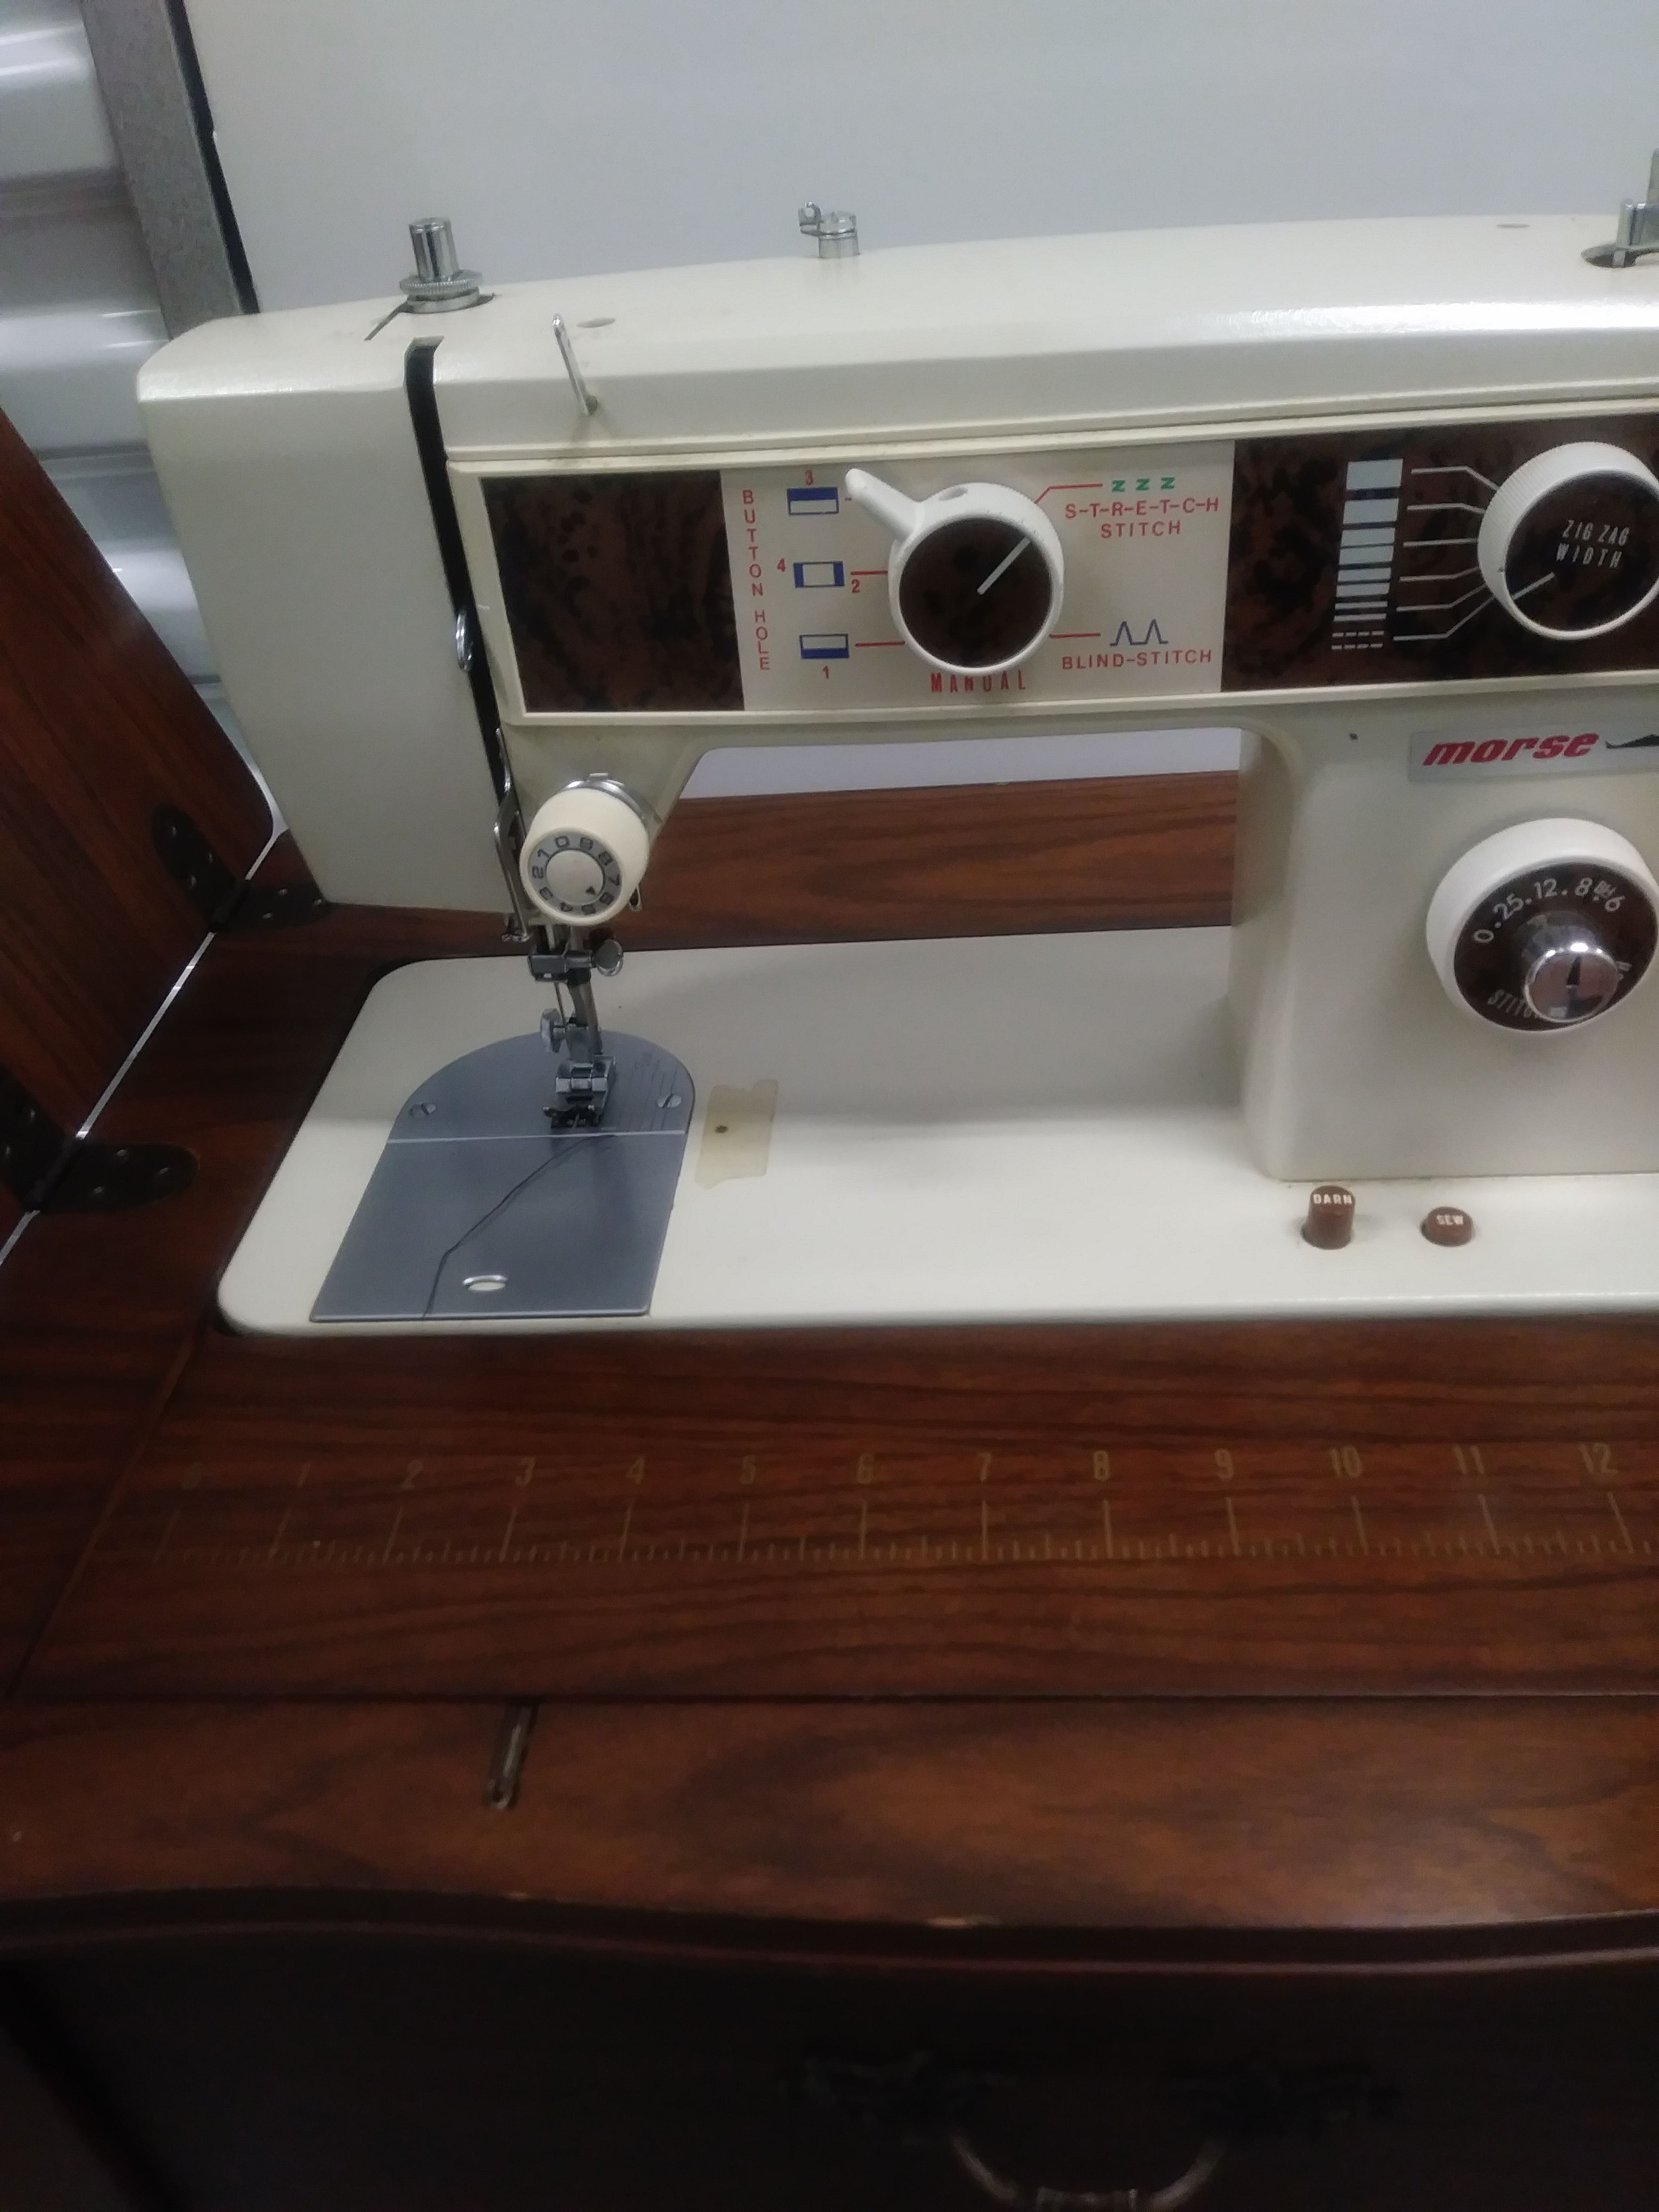 Vintage sewing machine in table